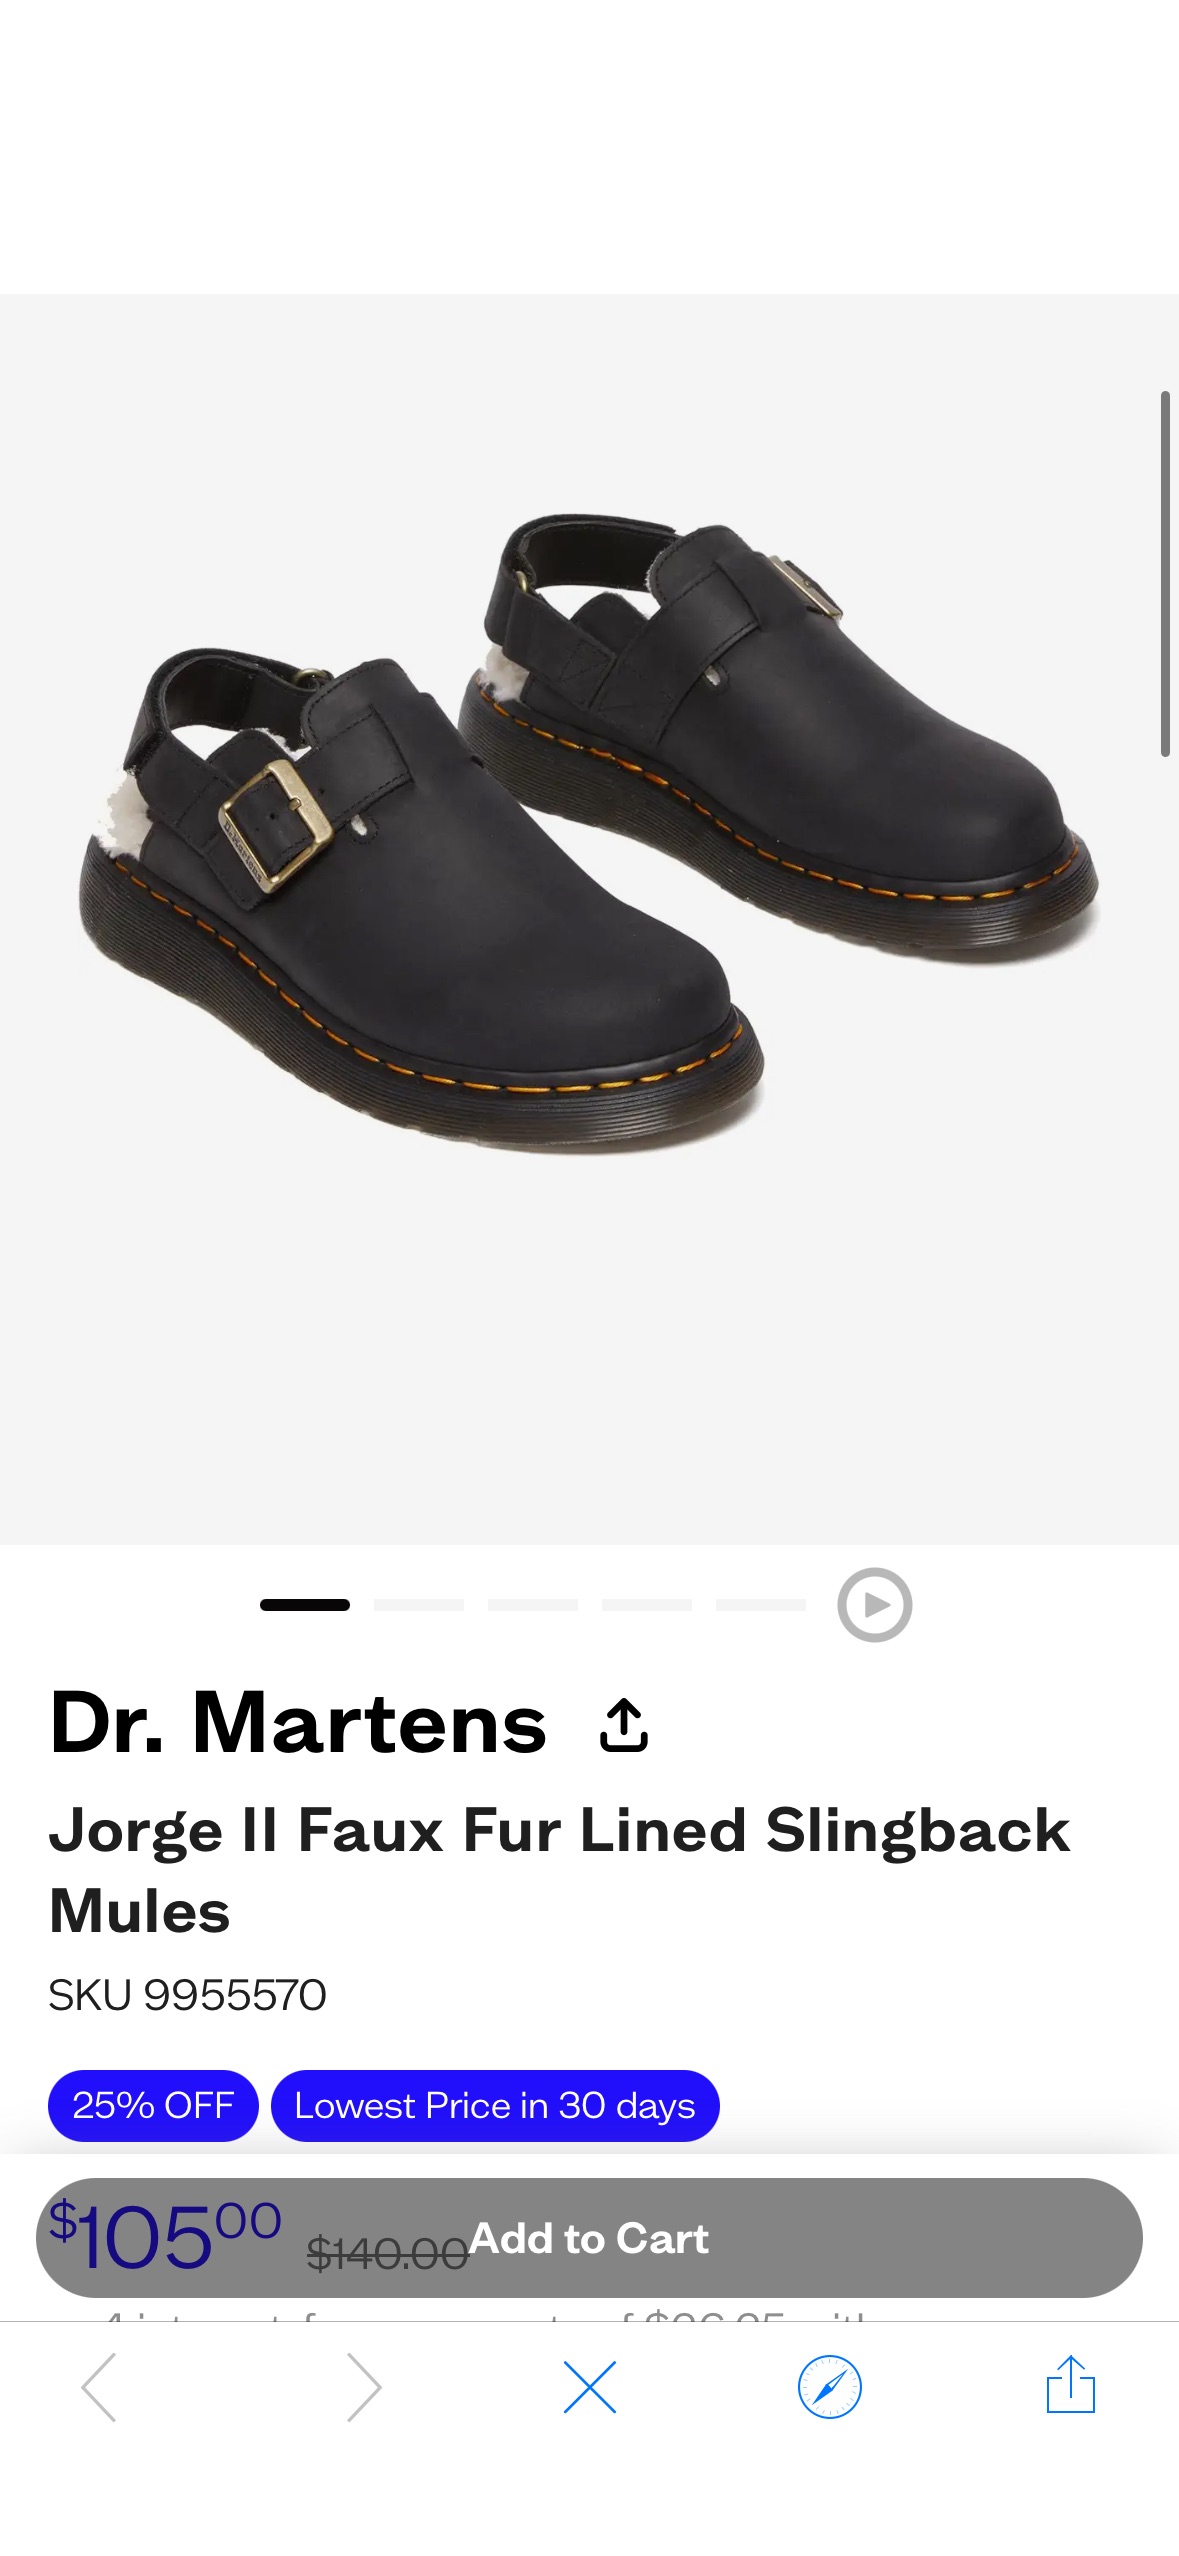 Dr. Martens Jorge II Faux Fur Lined Slingback Mules | Zappos.com